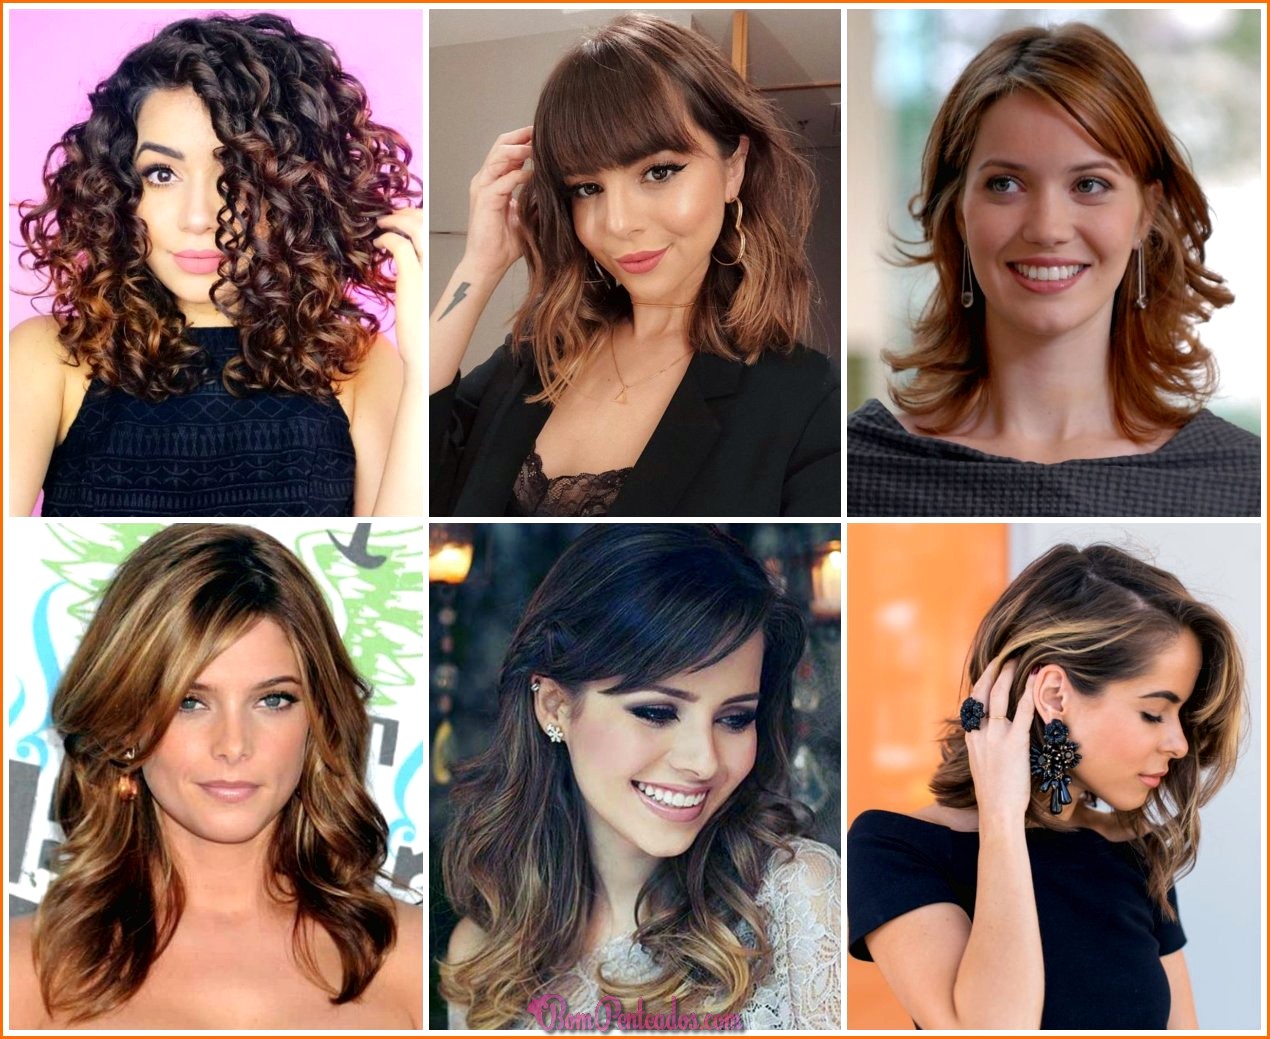 Tipos de cabelo feminino - Tipos de cabelo fêmeas curtos